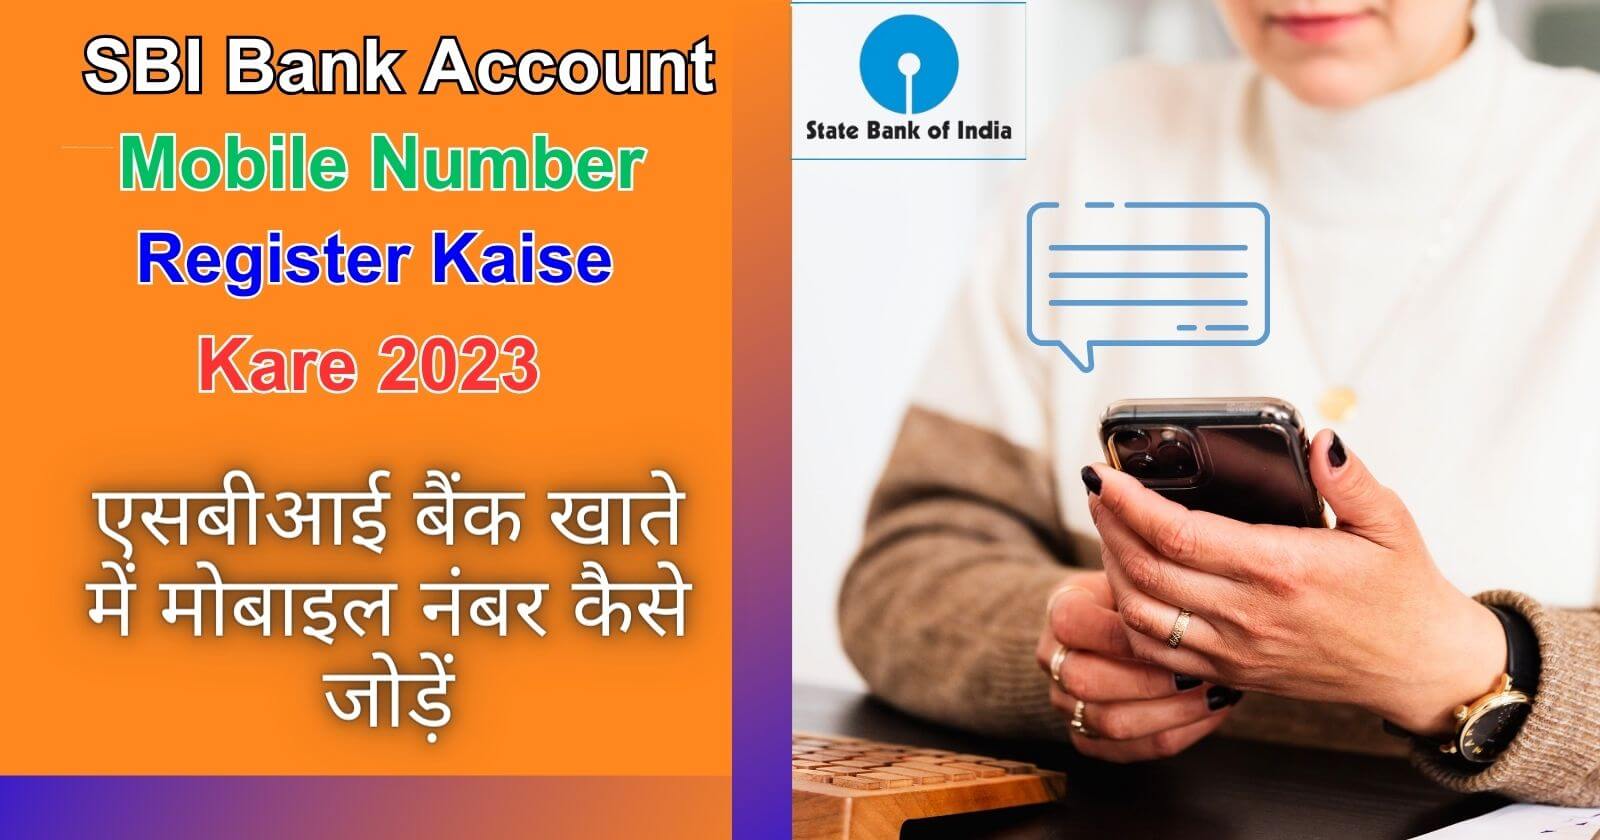 SBI Bank Account me Mobile Number Register Kaise Kare